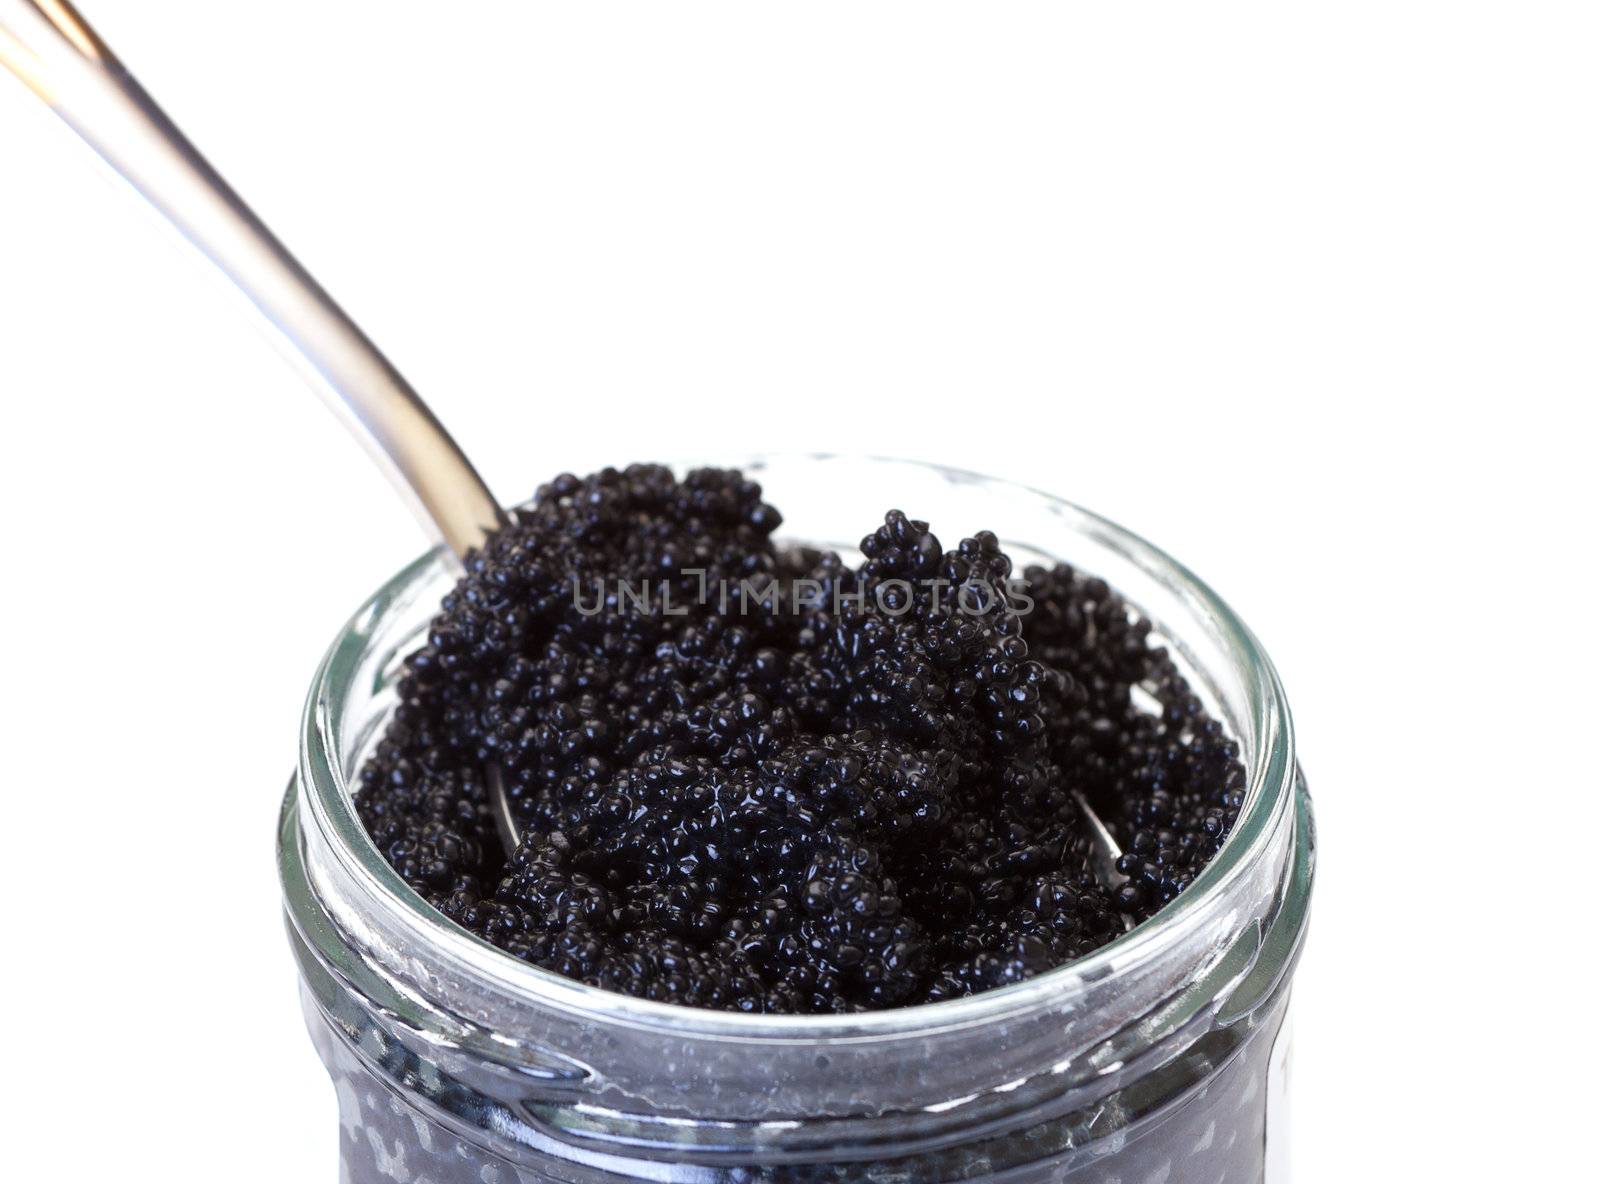 Black caviar on a spoon, white background